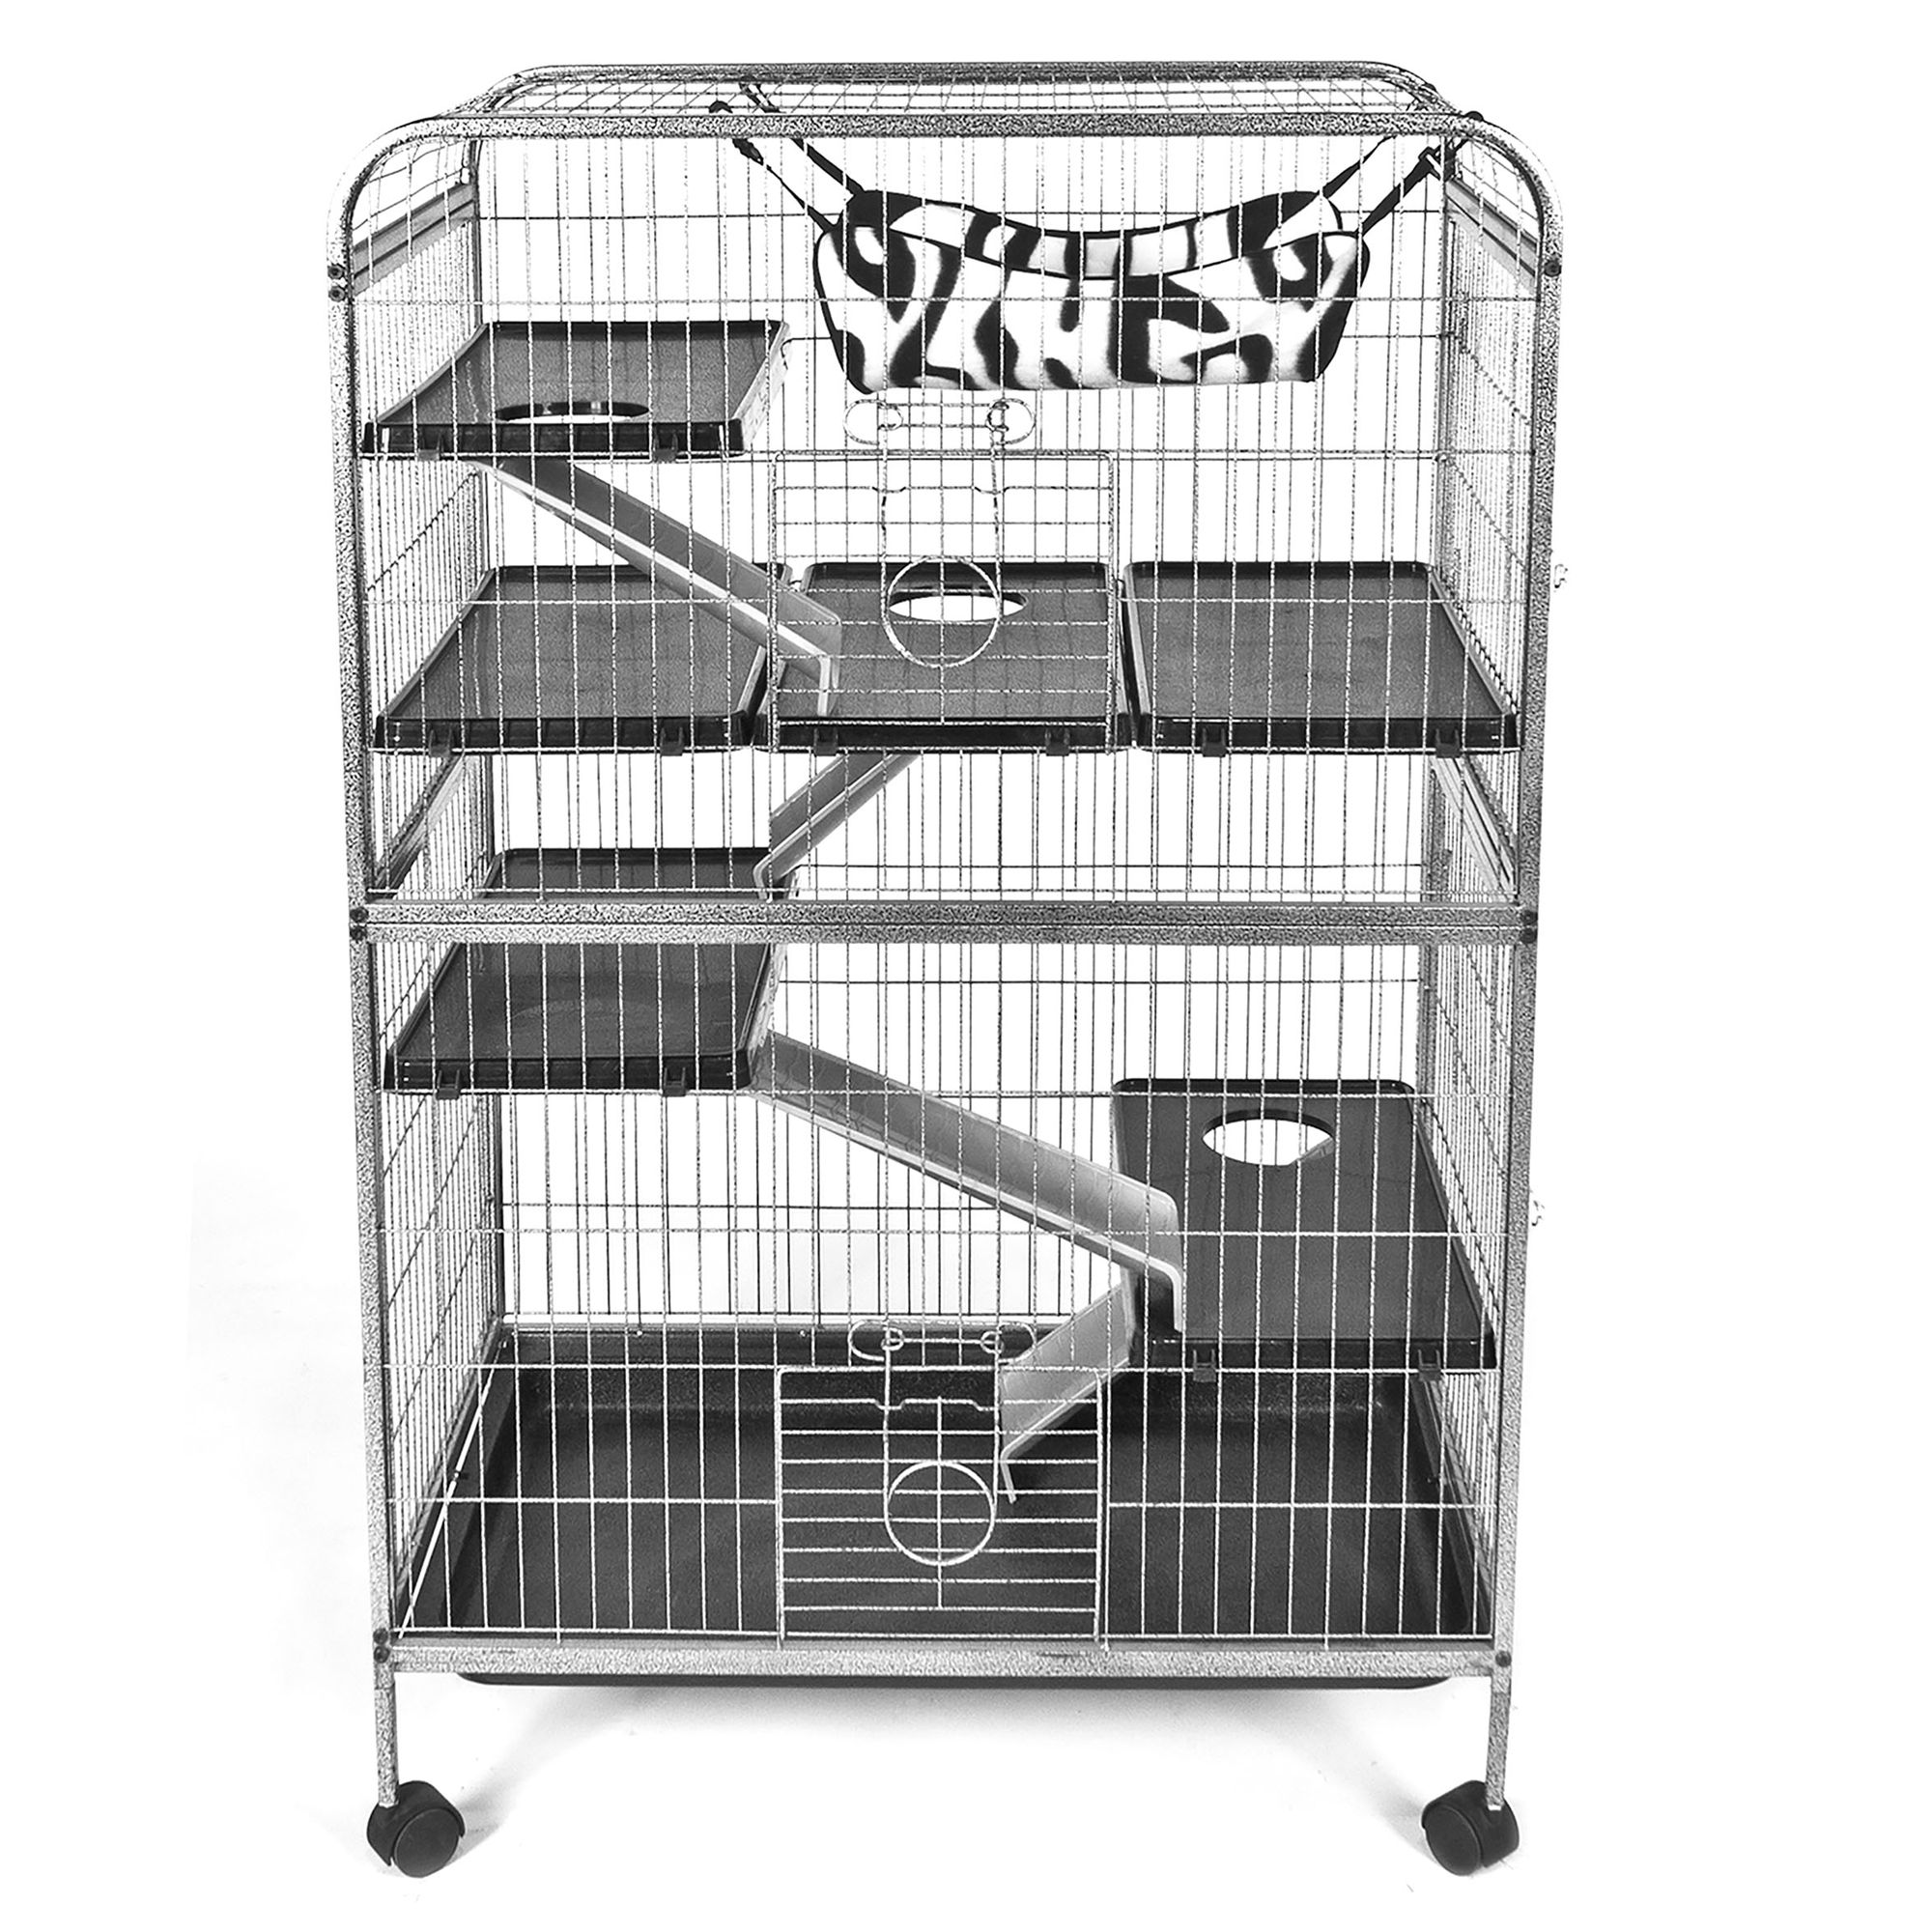 petsmart rabbit cage